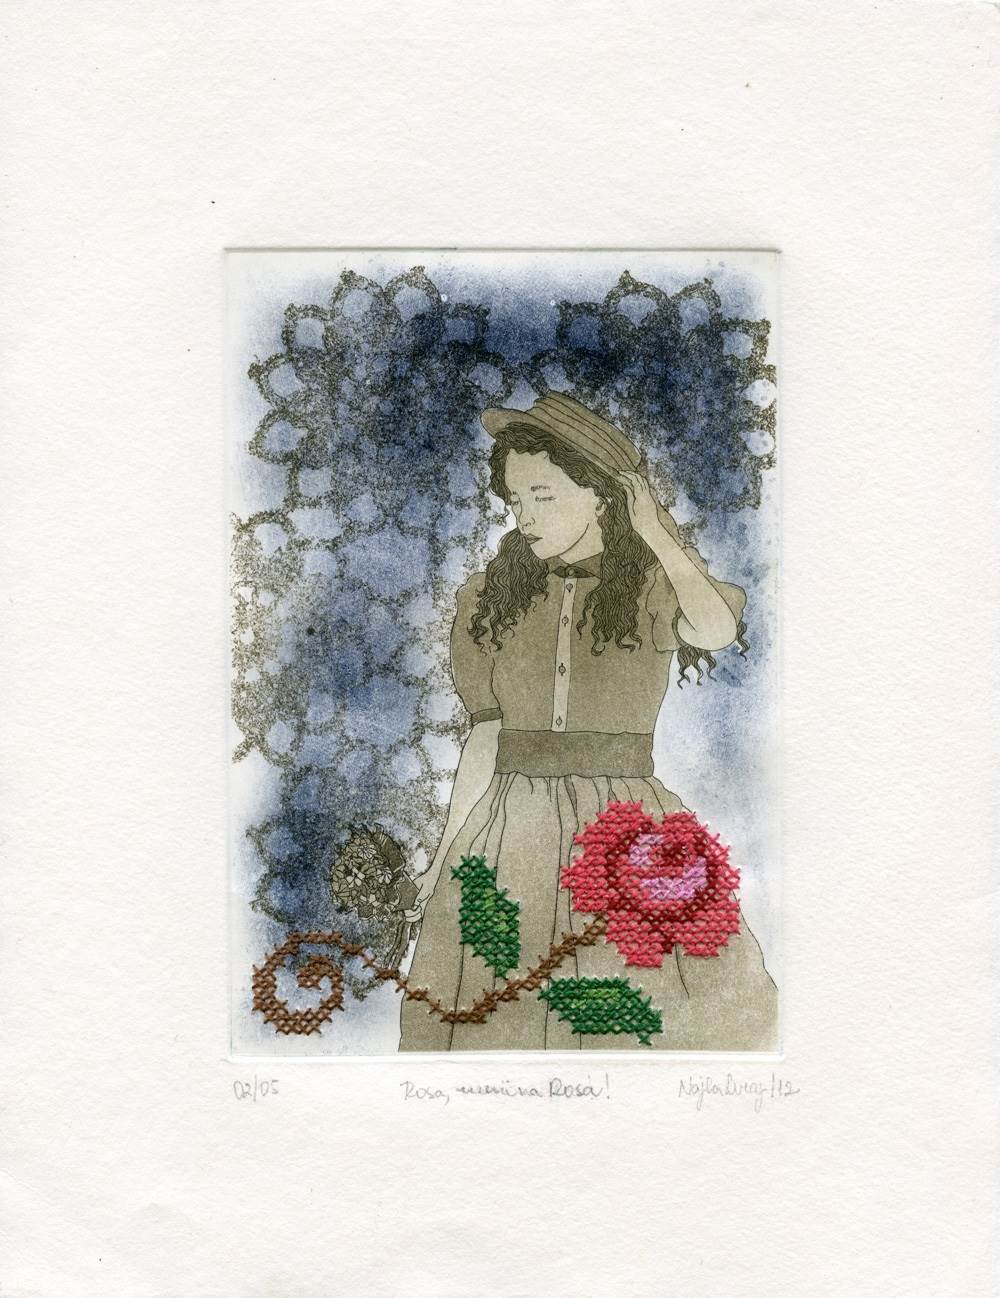 Rosa, menina Rosa!, original   Dessin et illustration par Najla Leroy